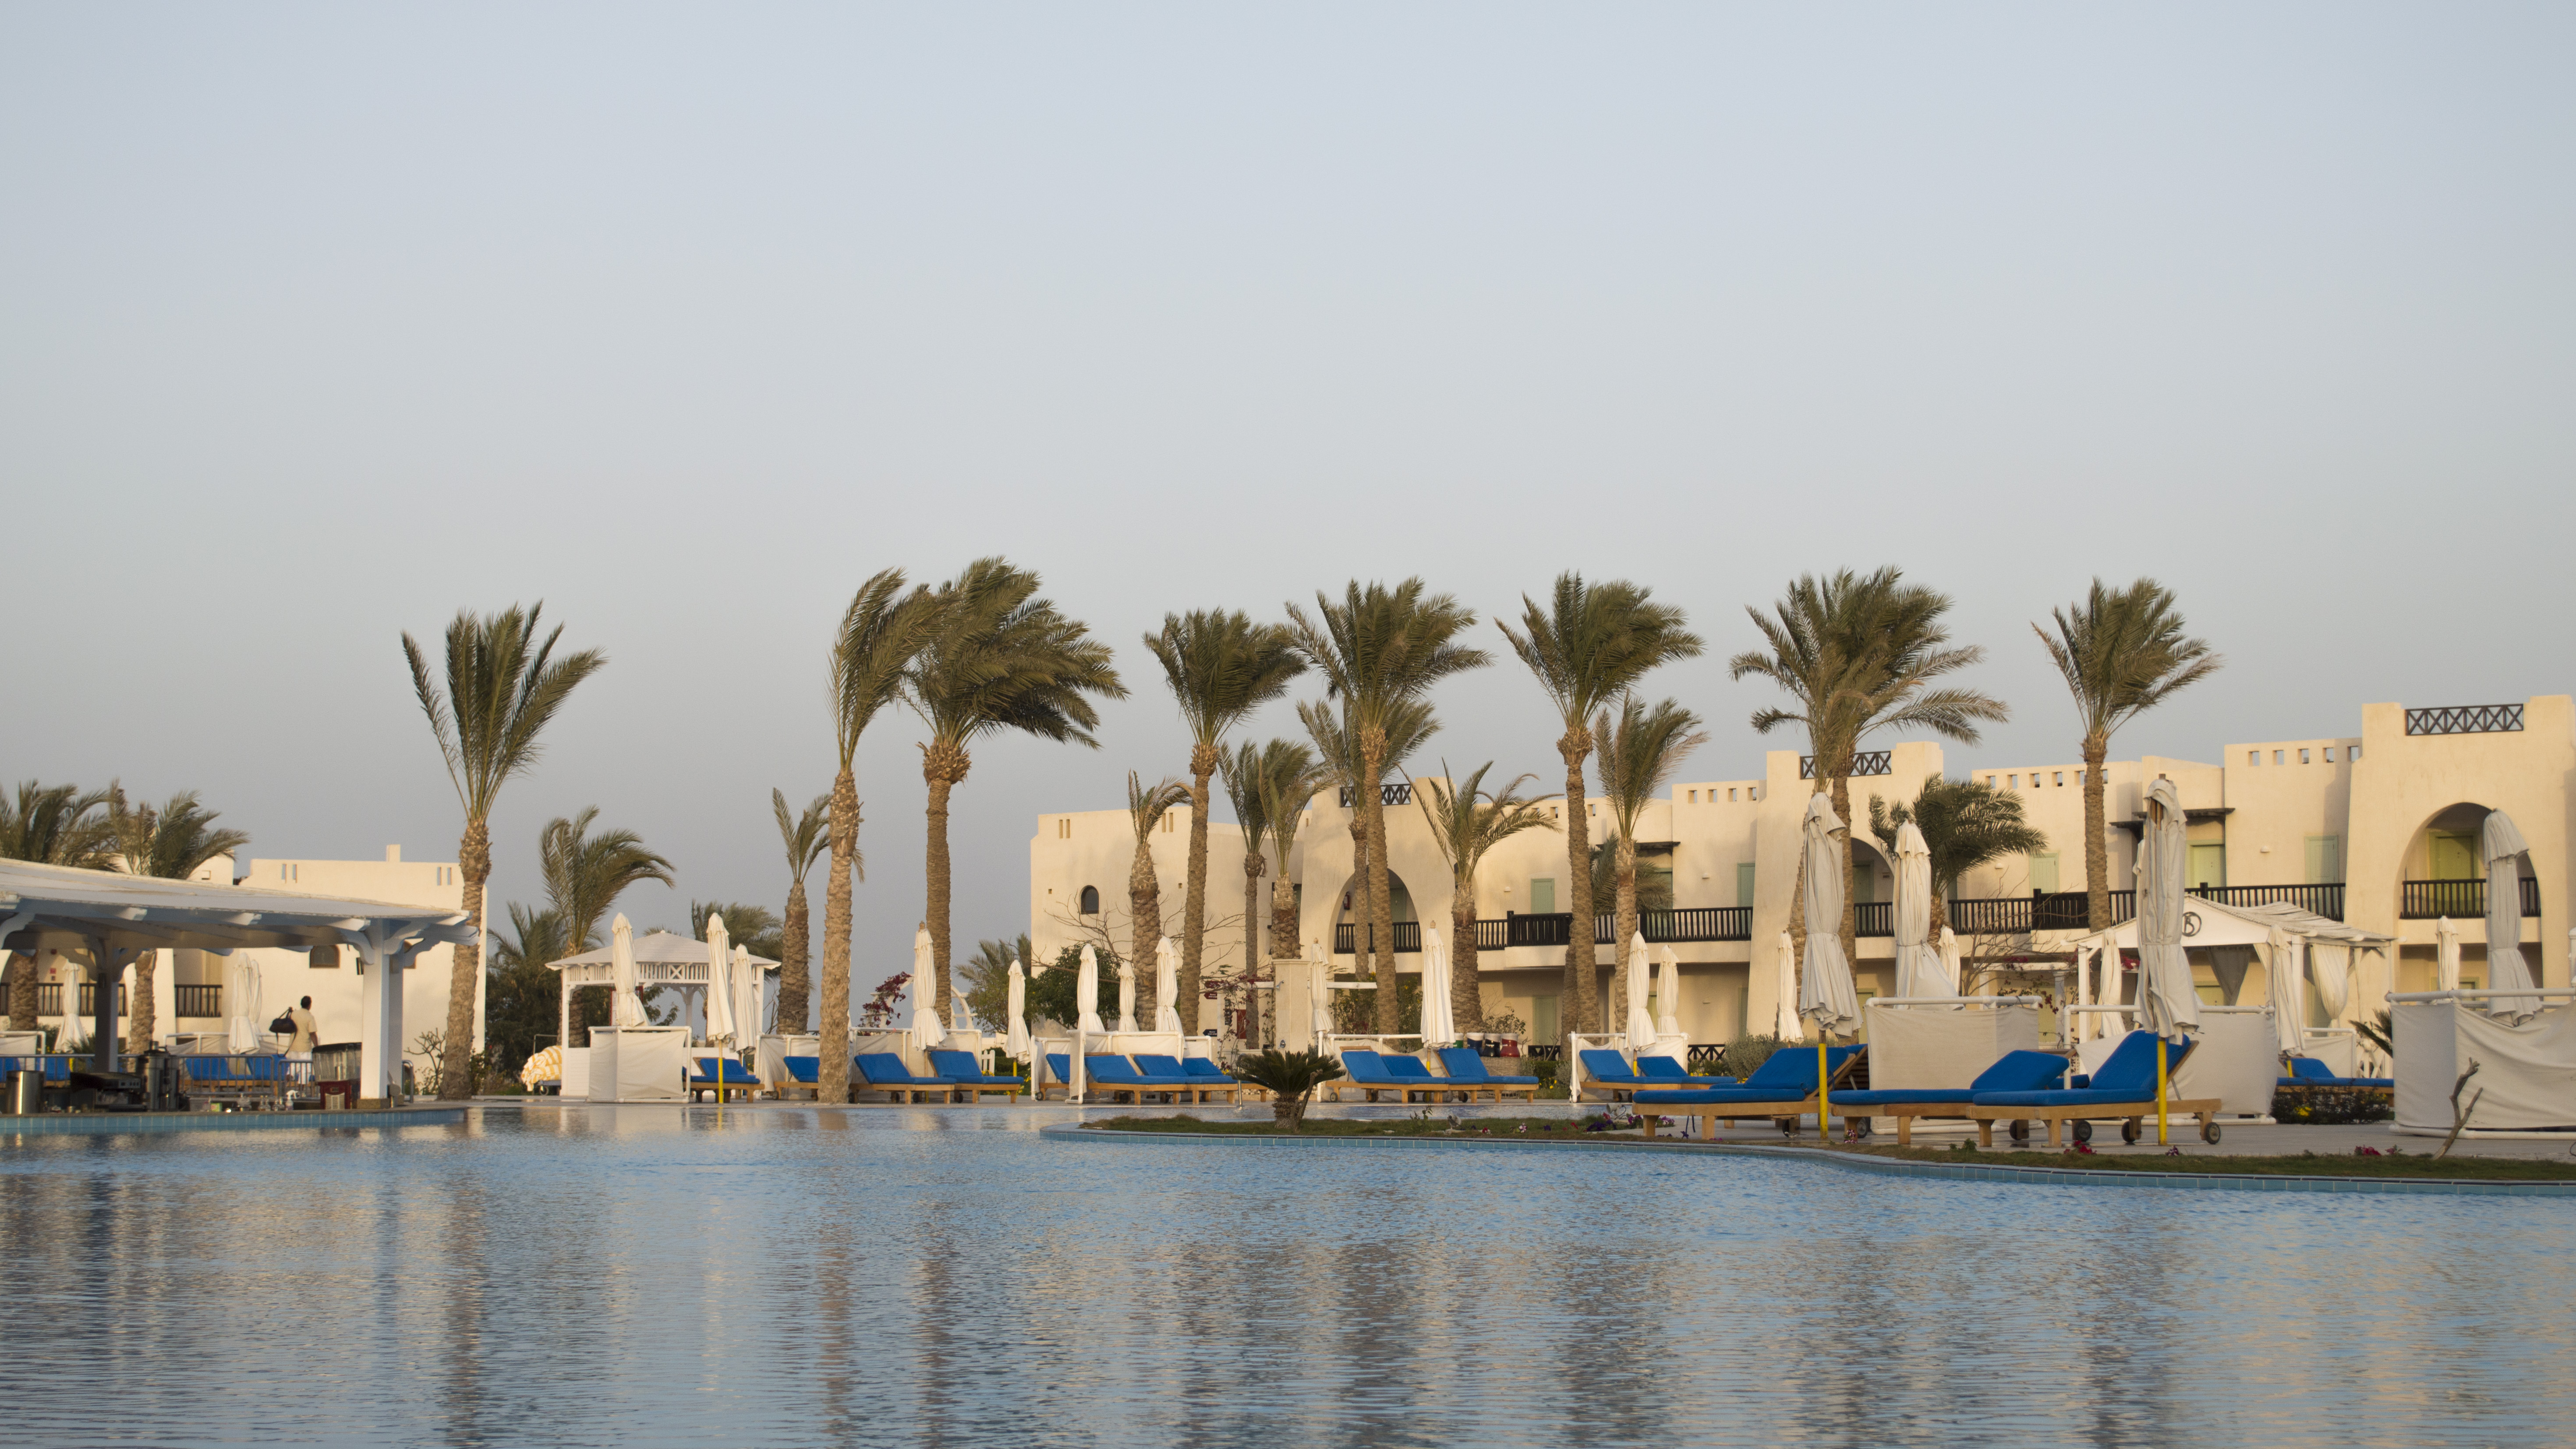 Hotel: Hilton Marsa Alam Nubian Resort in Egypt